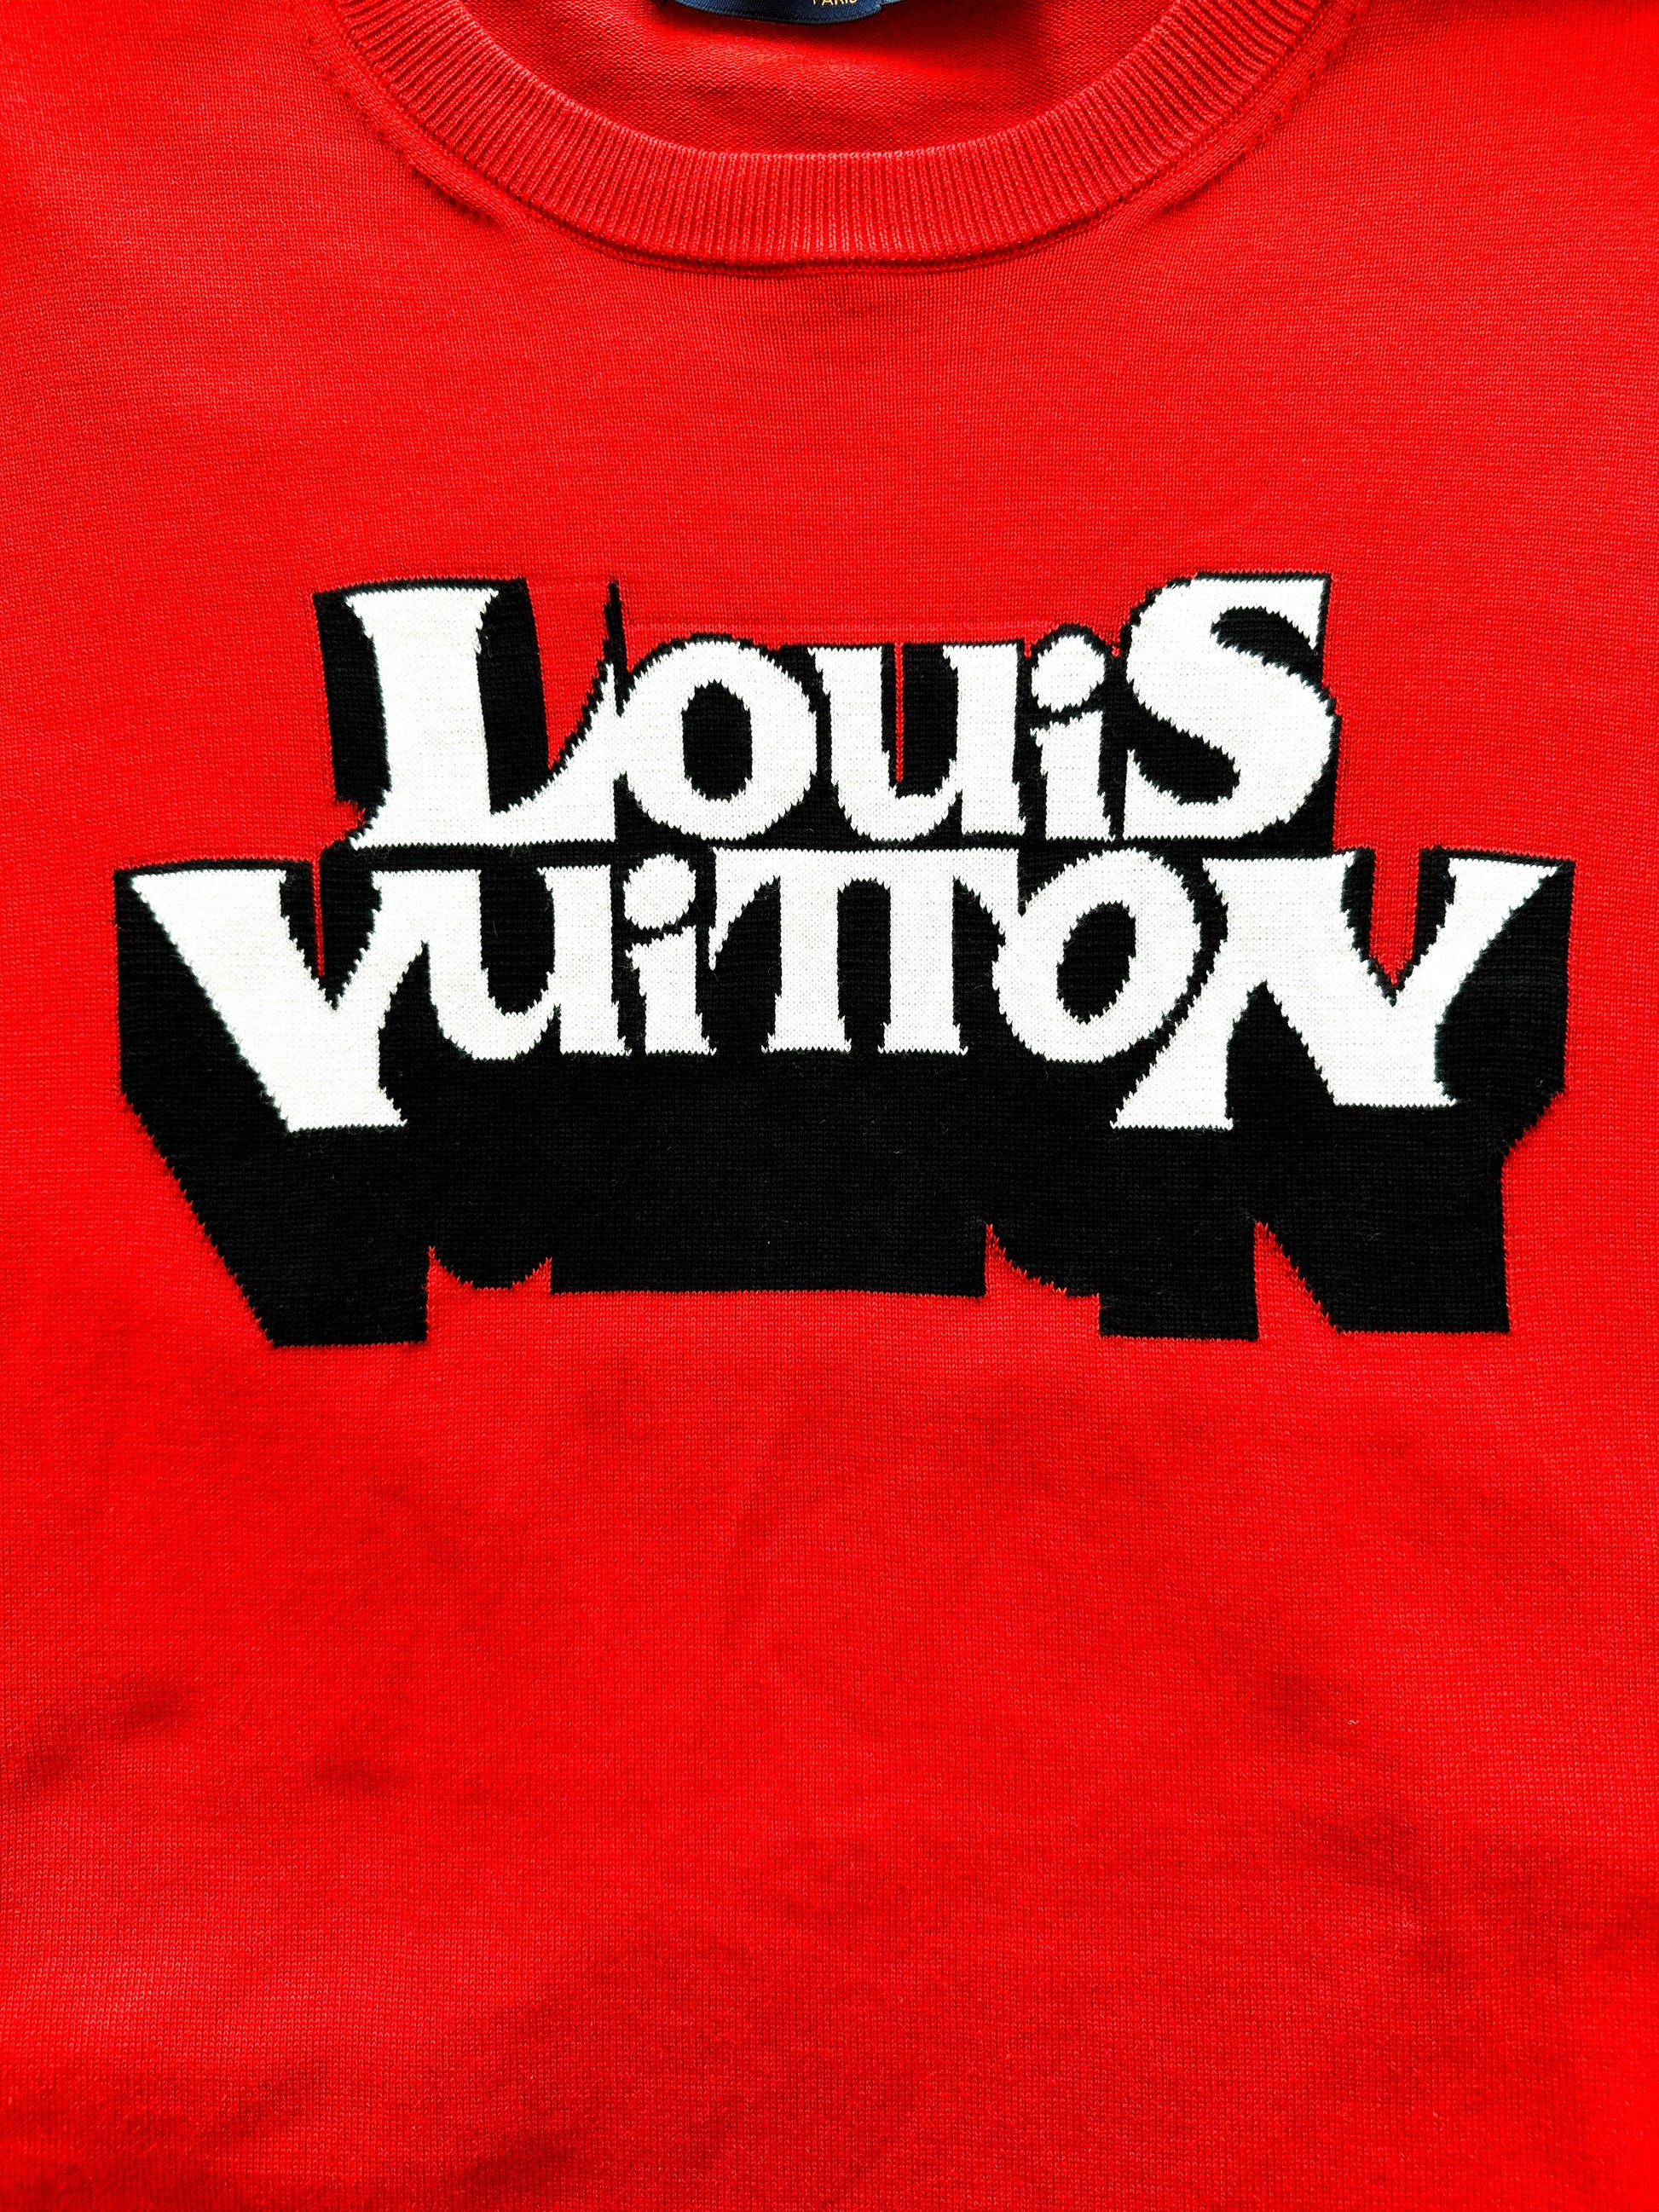 Louis Vuitton Shirt 